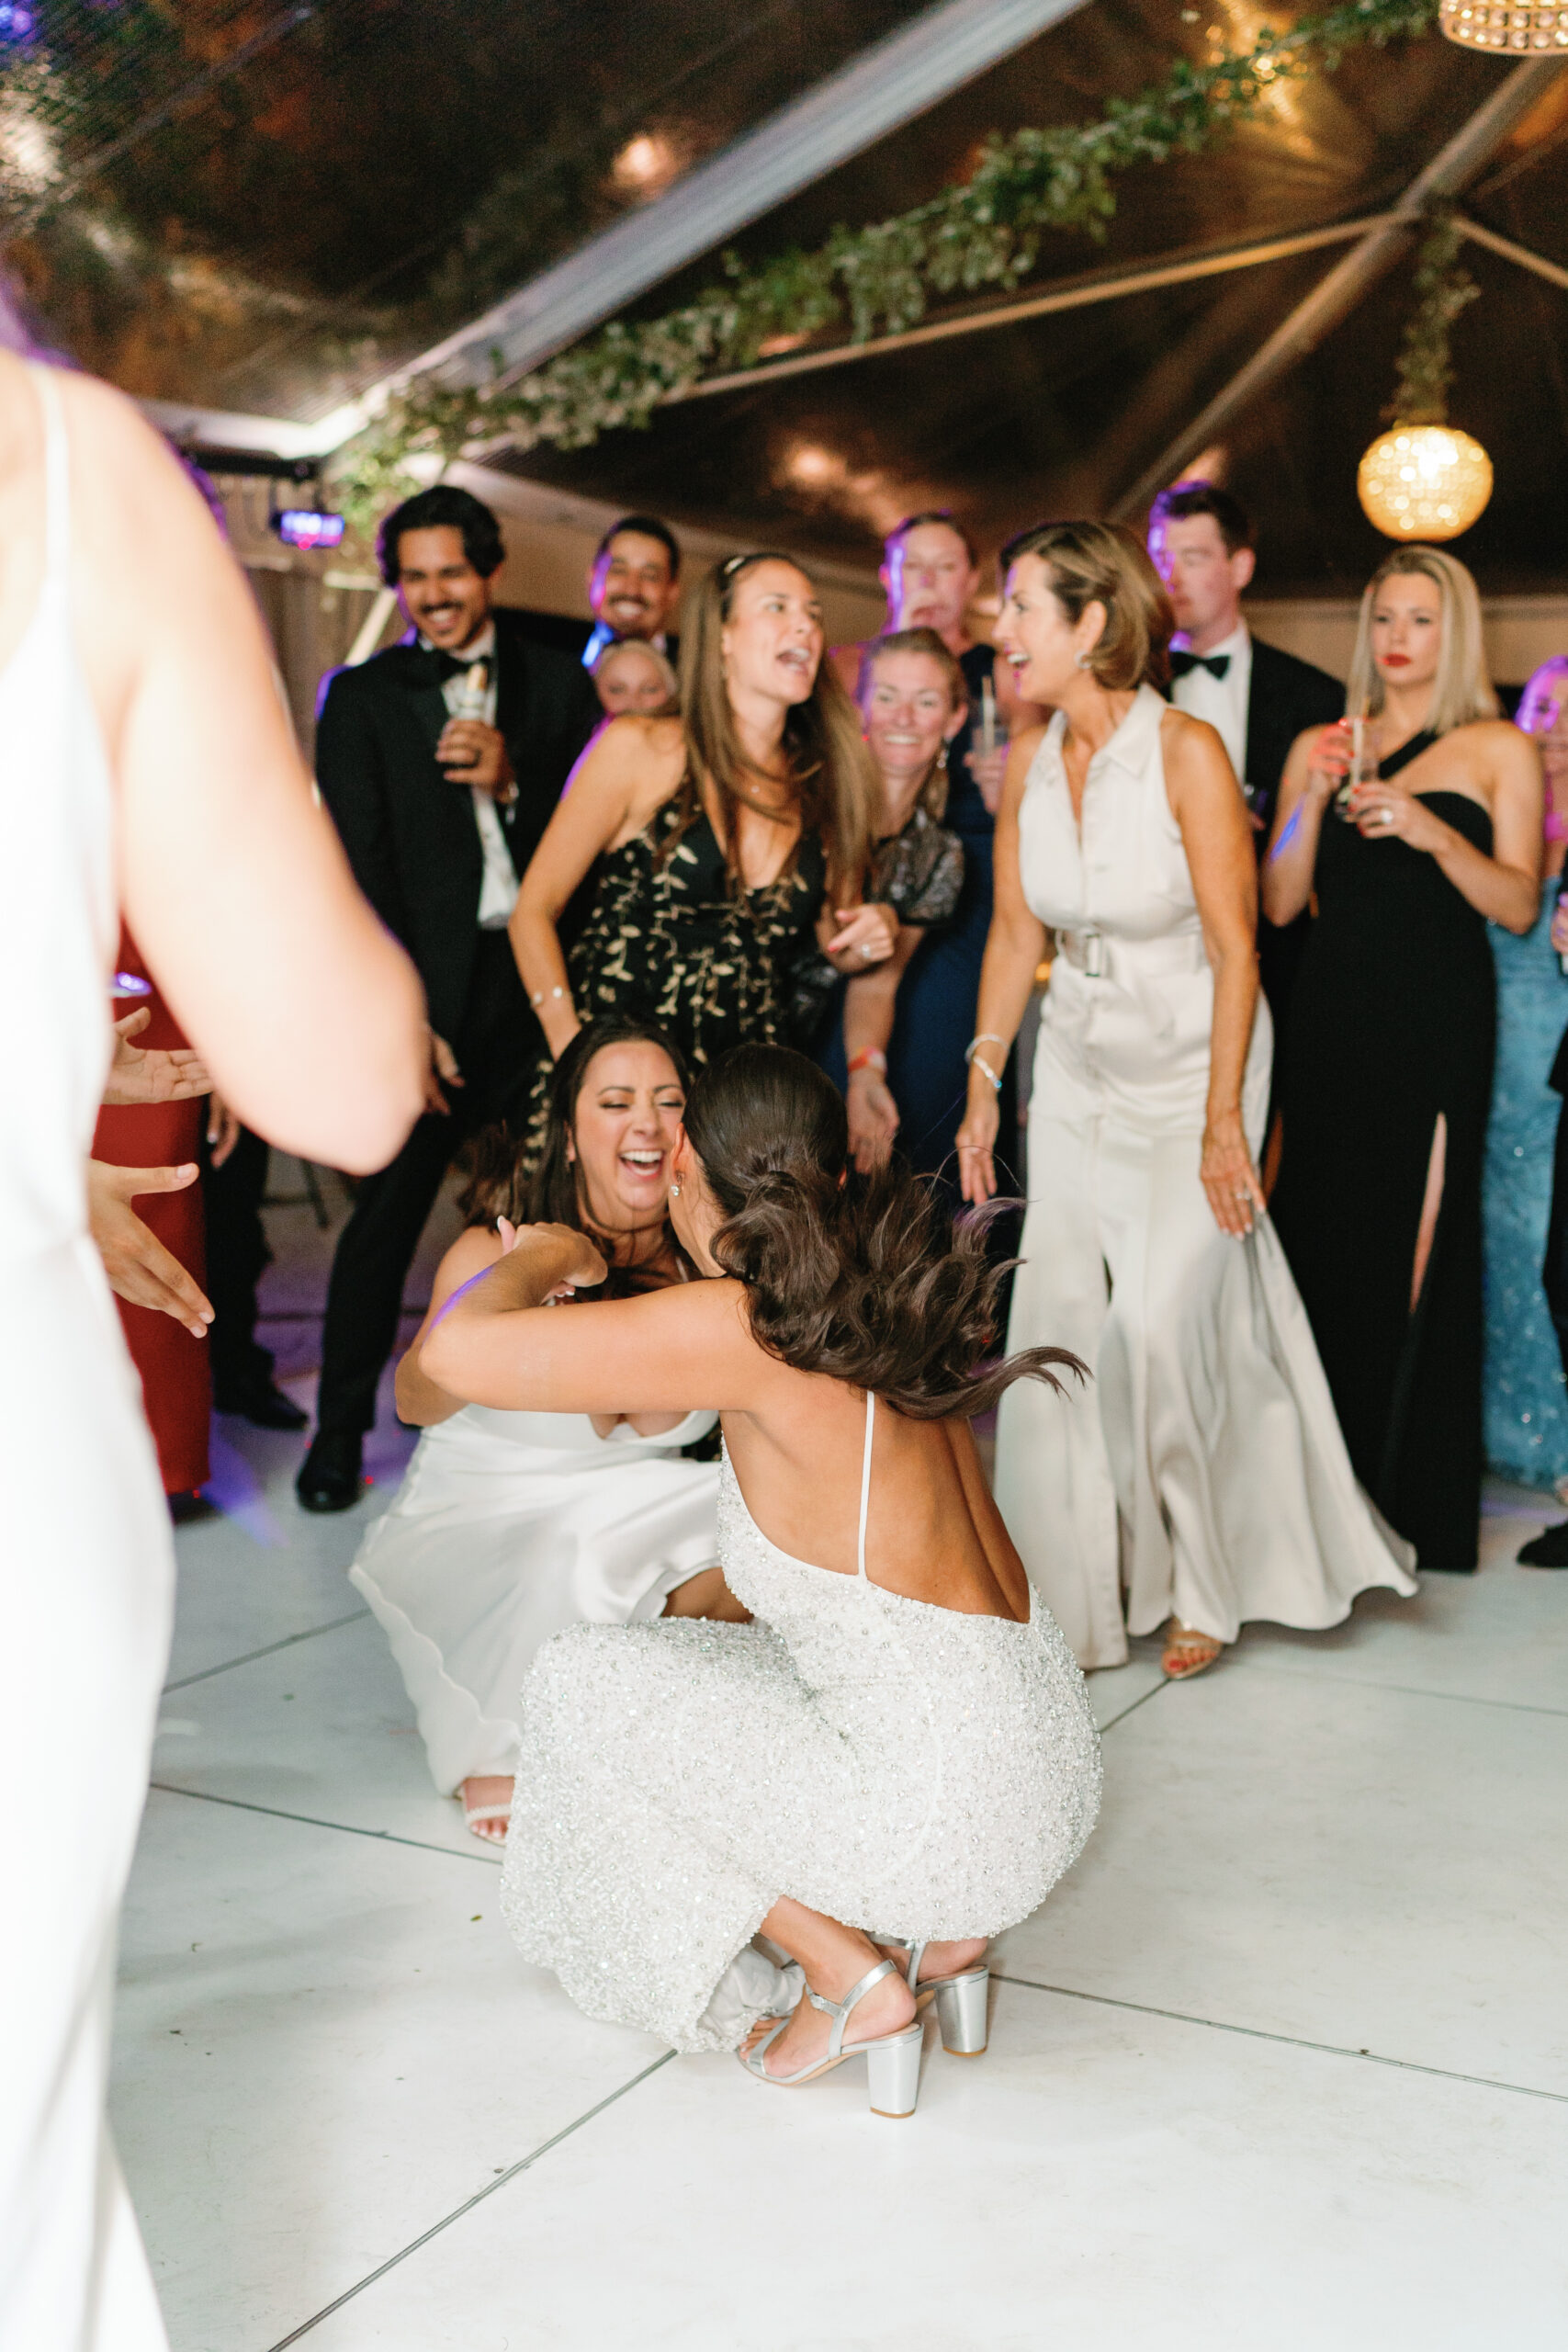 Bride dances with her best friend.